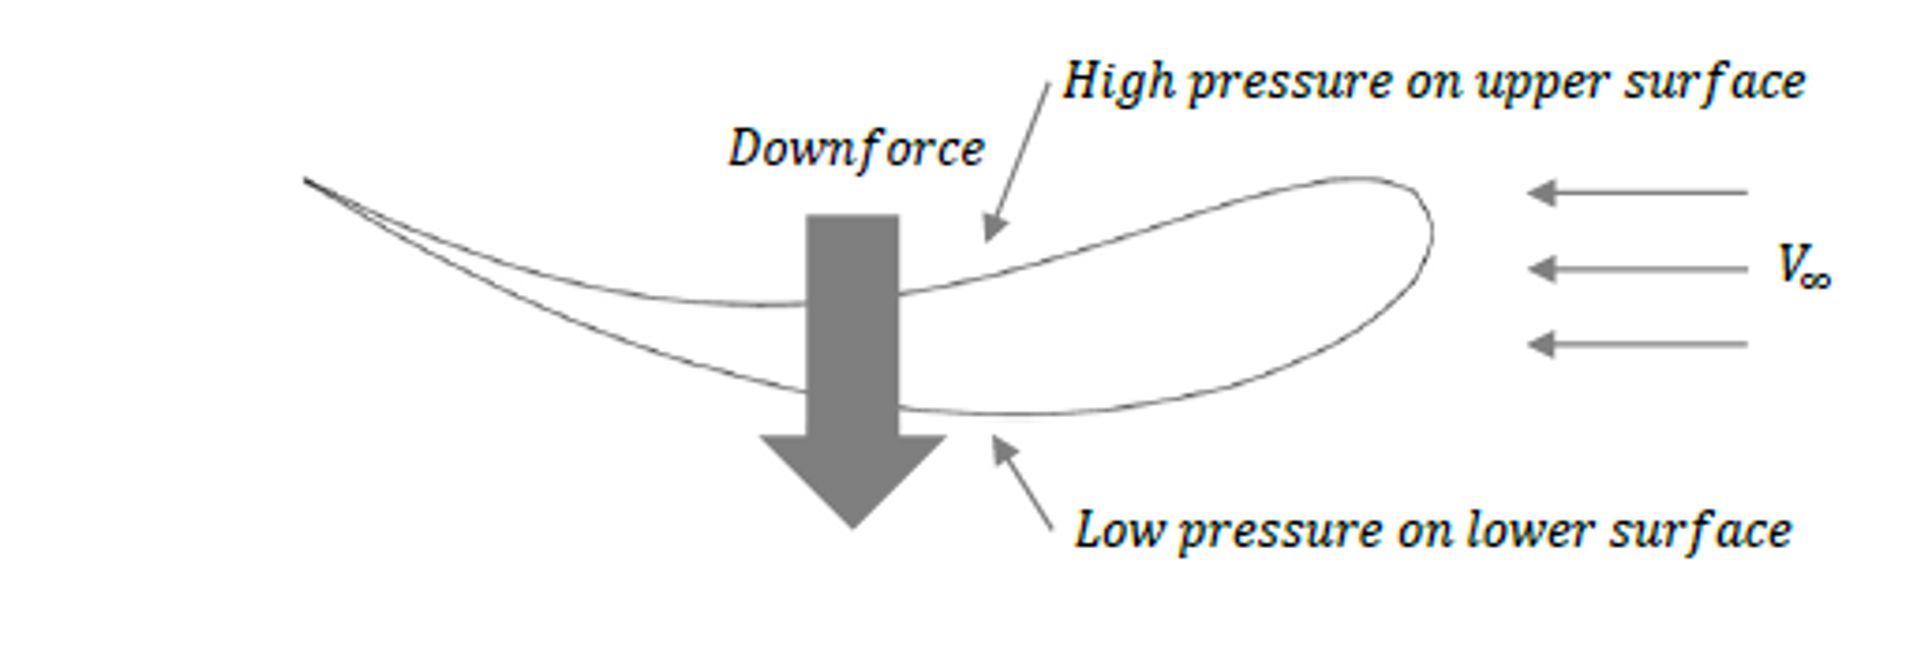 Illustration showing downforce.